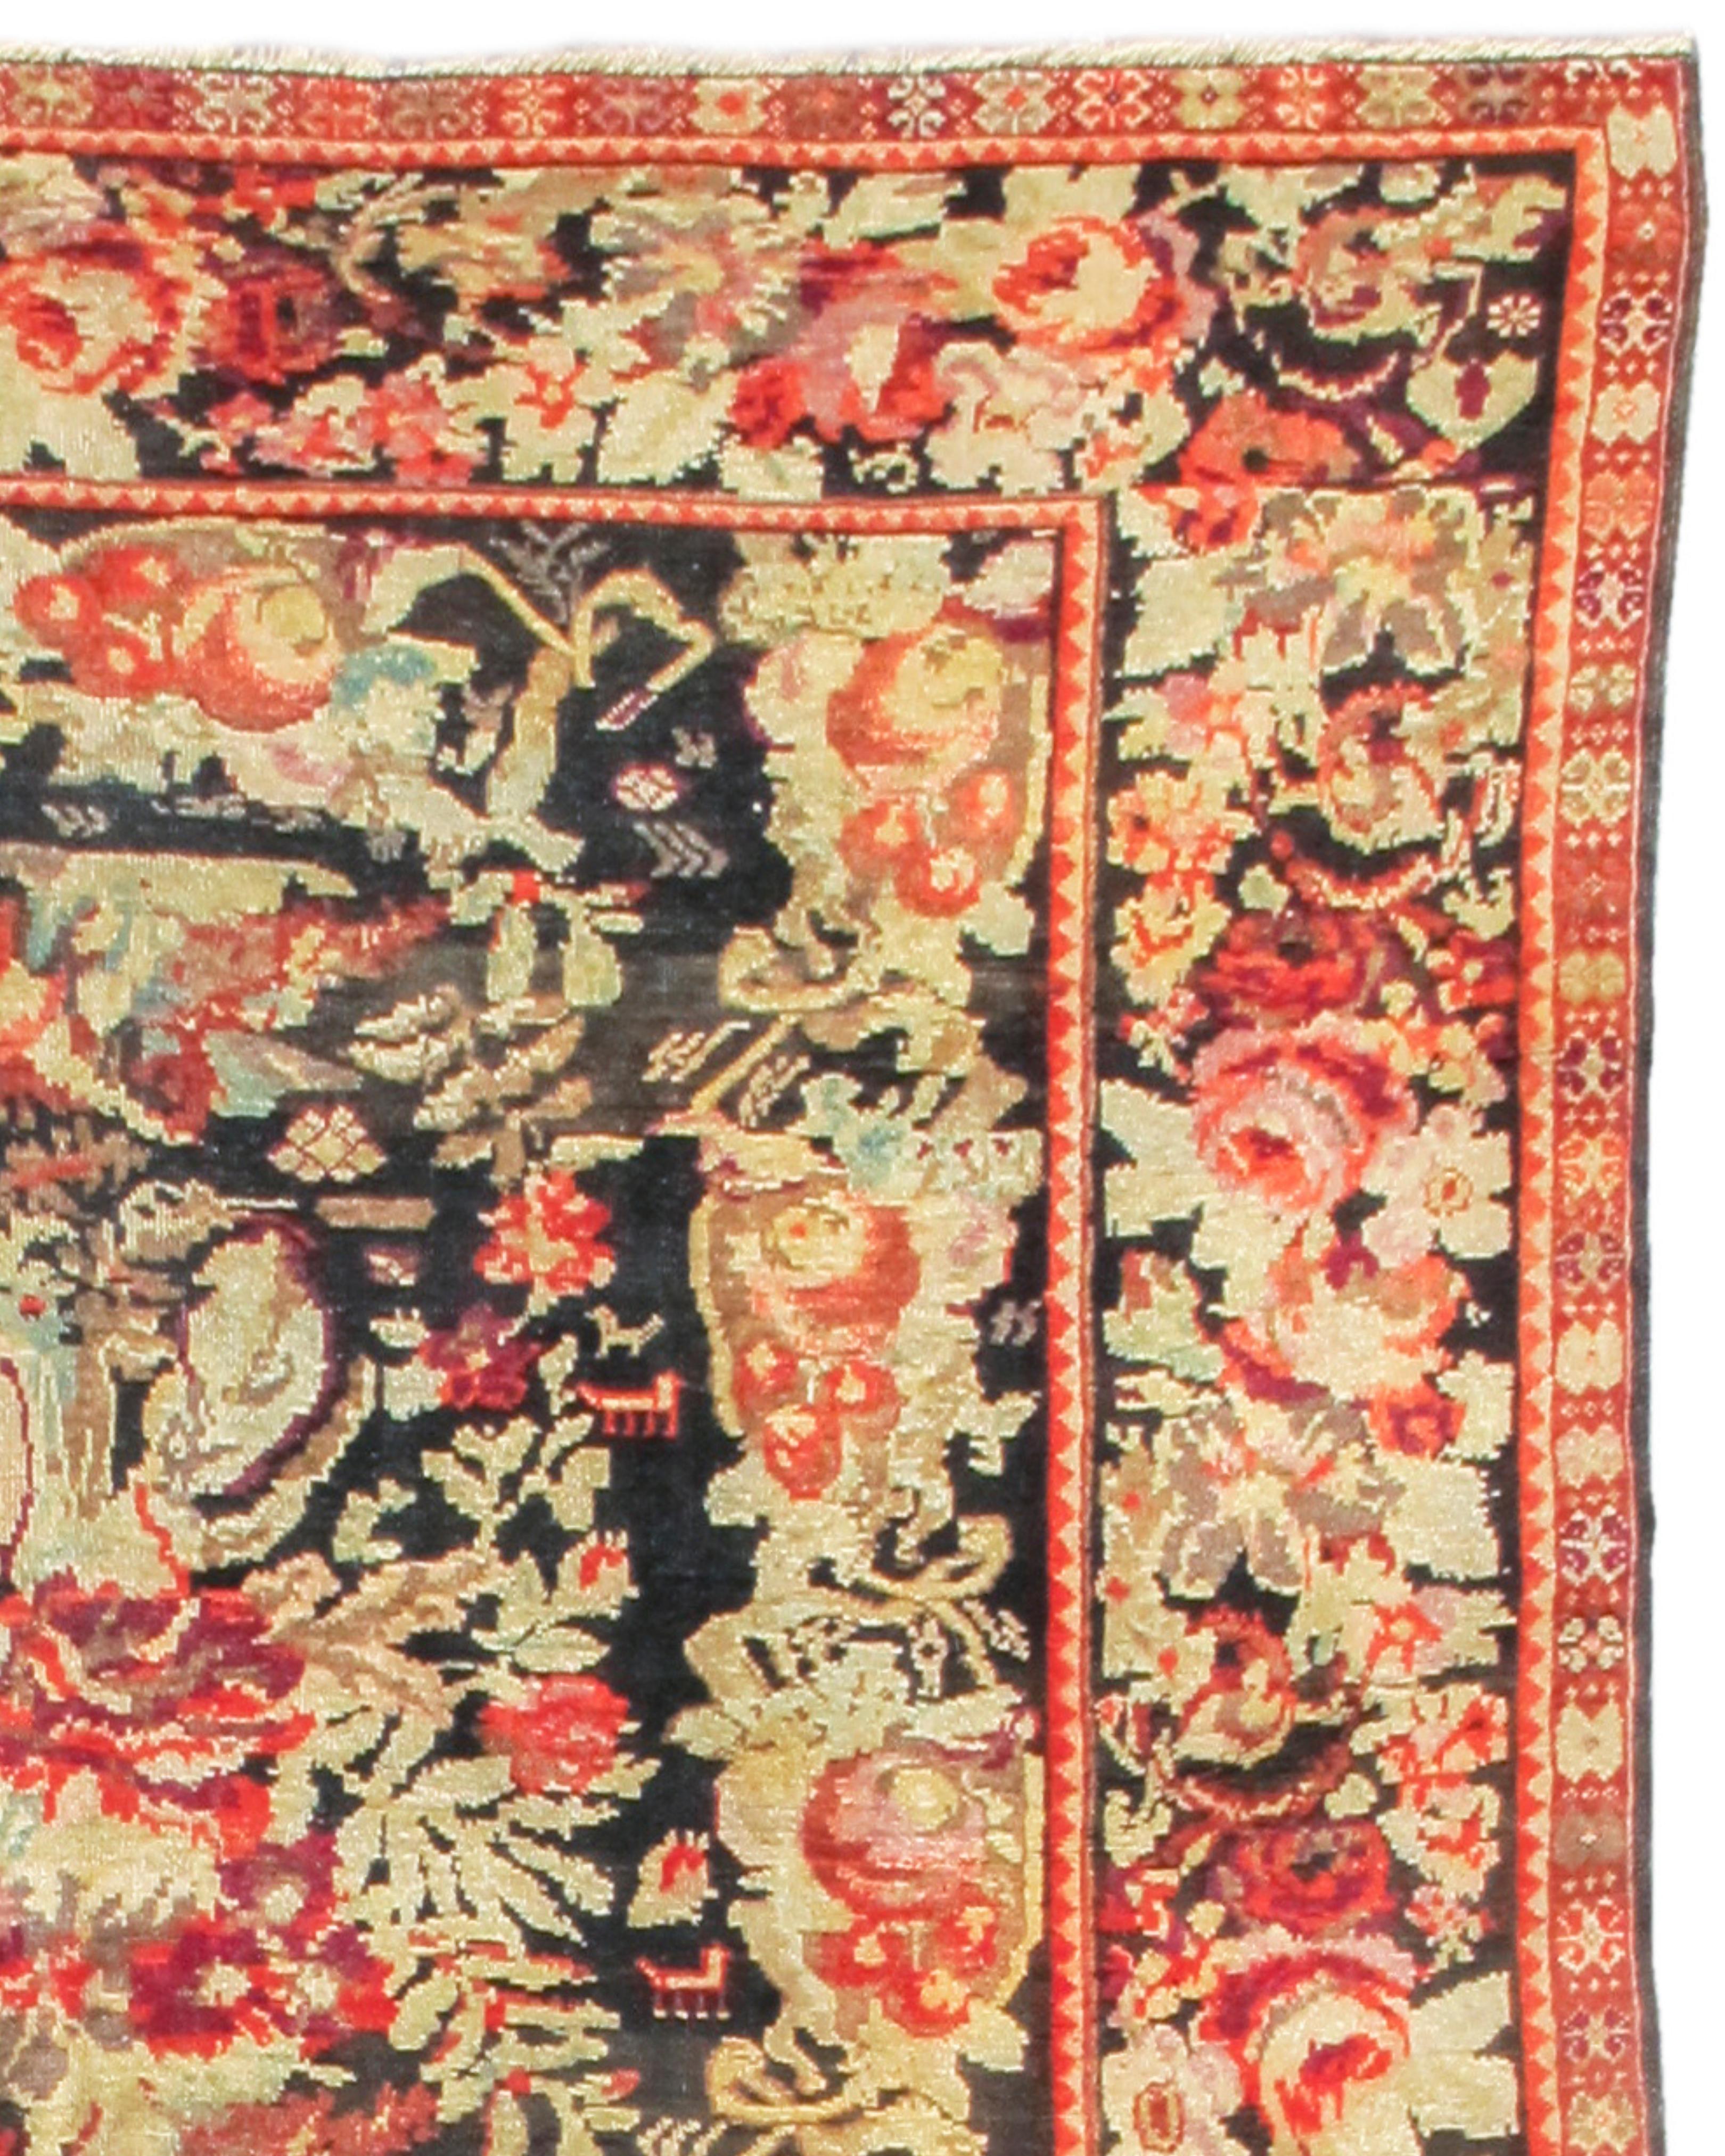 Antique Caucasian Karabagh Rug, 19th Century

Additional Information:
Dimensions: 5'9